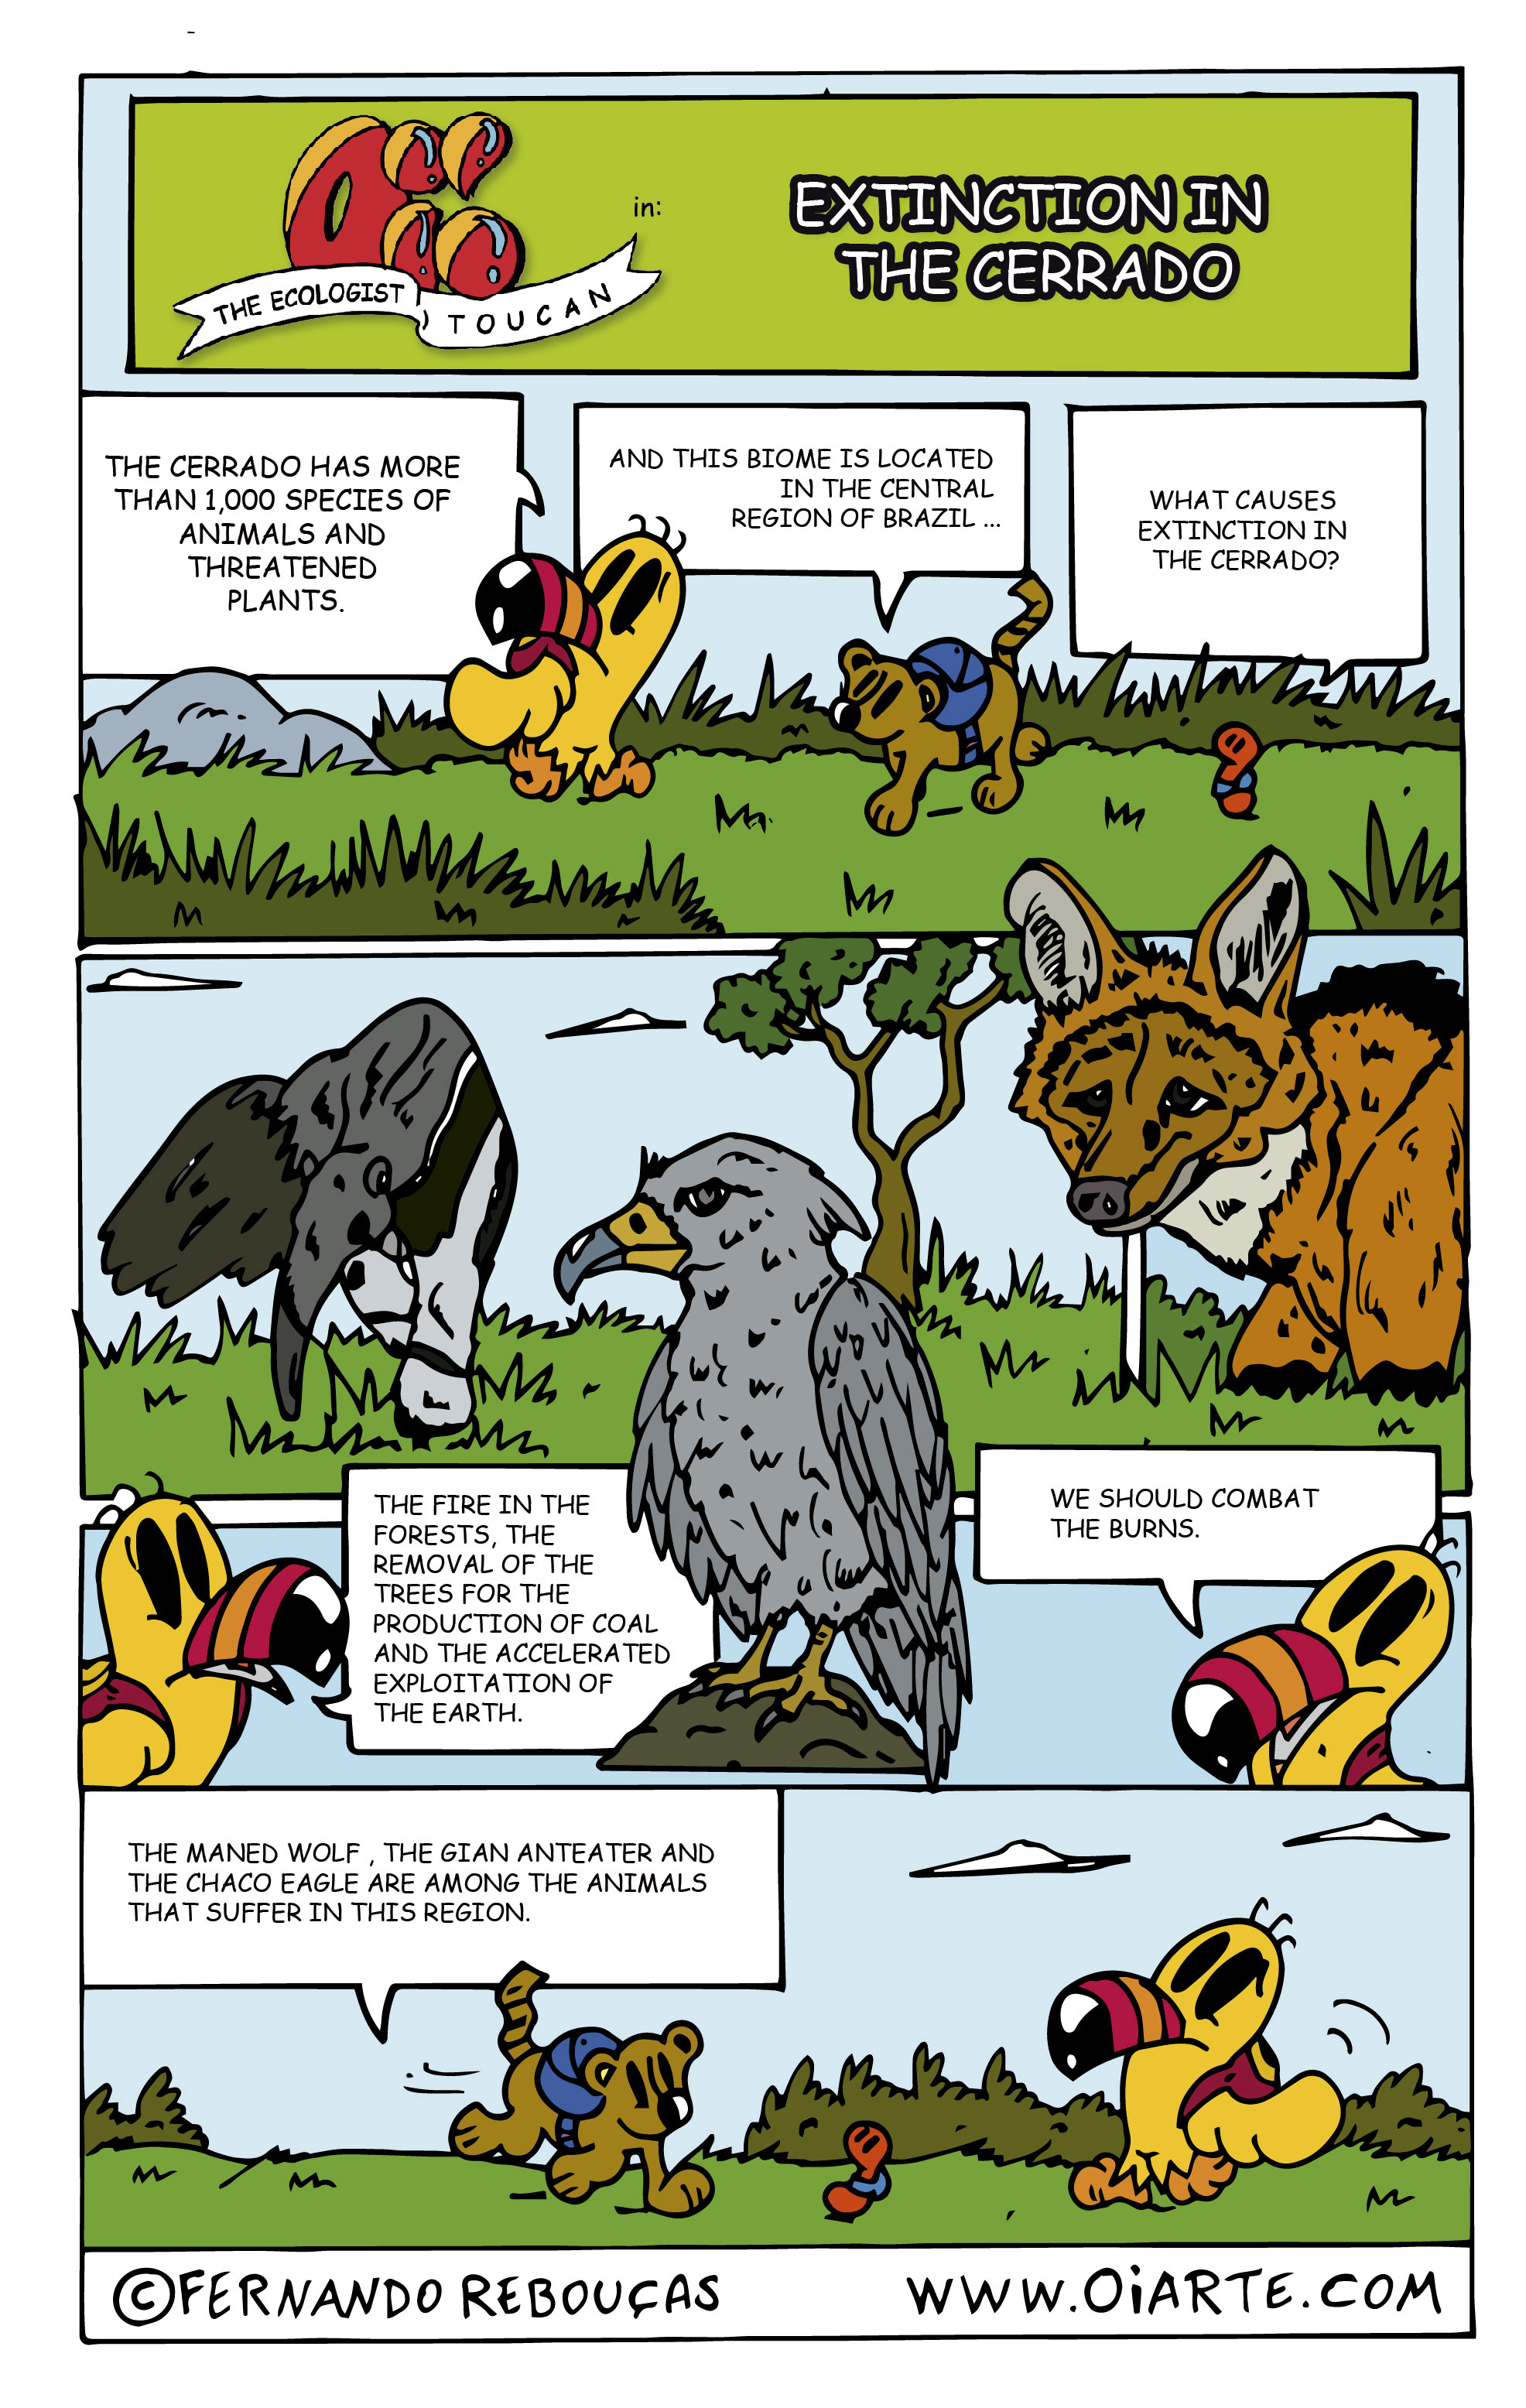 comics about comics about ecology